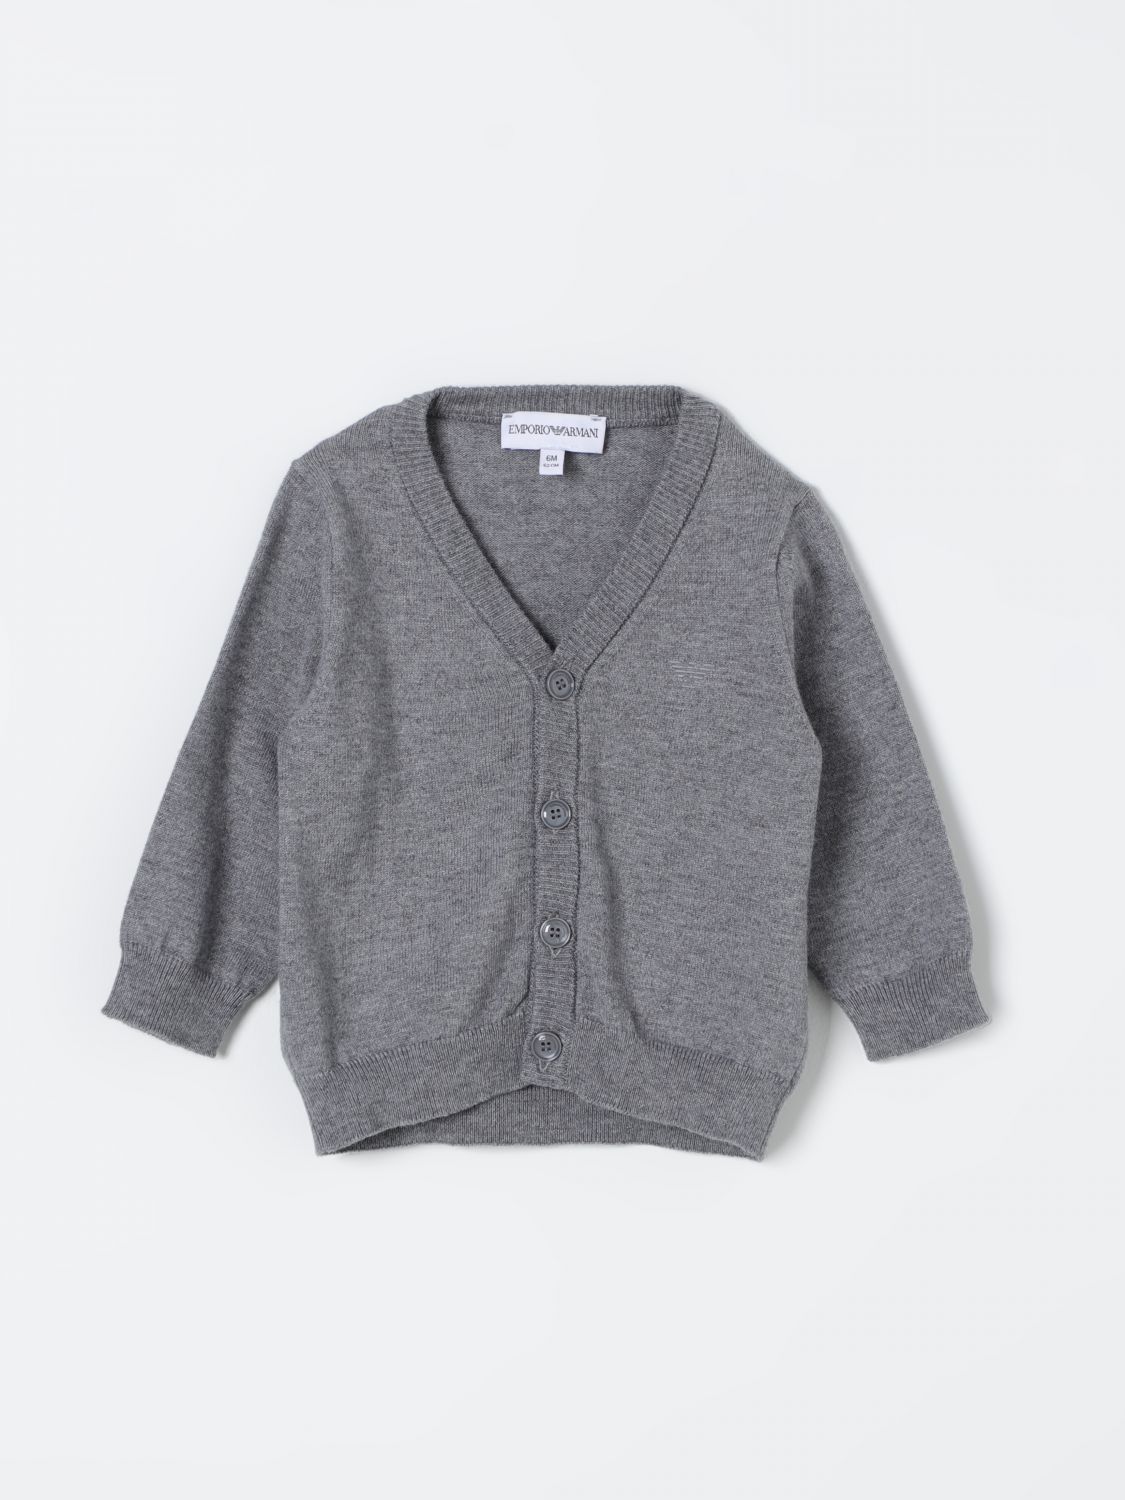 Emporio Armani Babies' Sweater  Kids Kids Color Grey In Gray